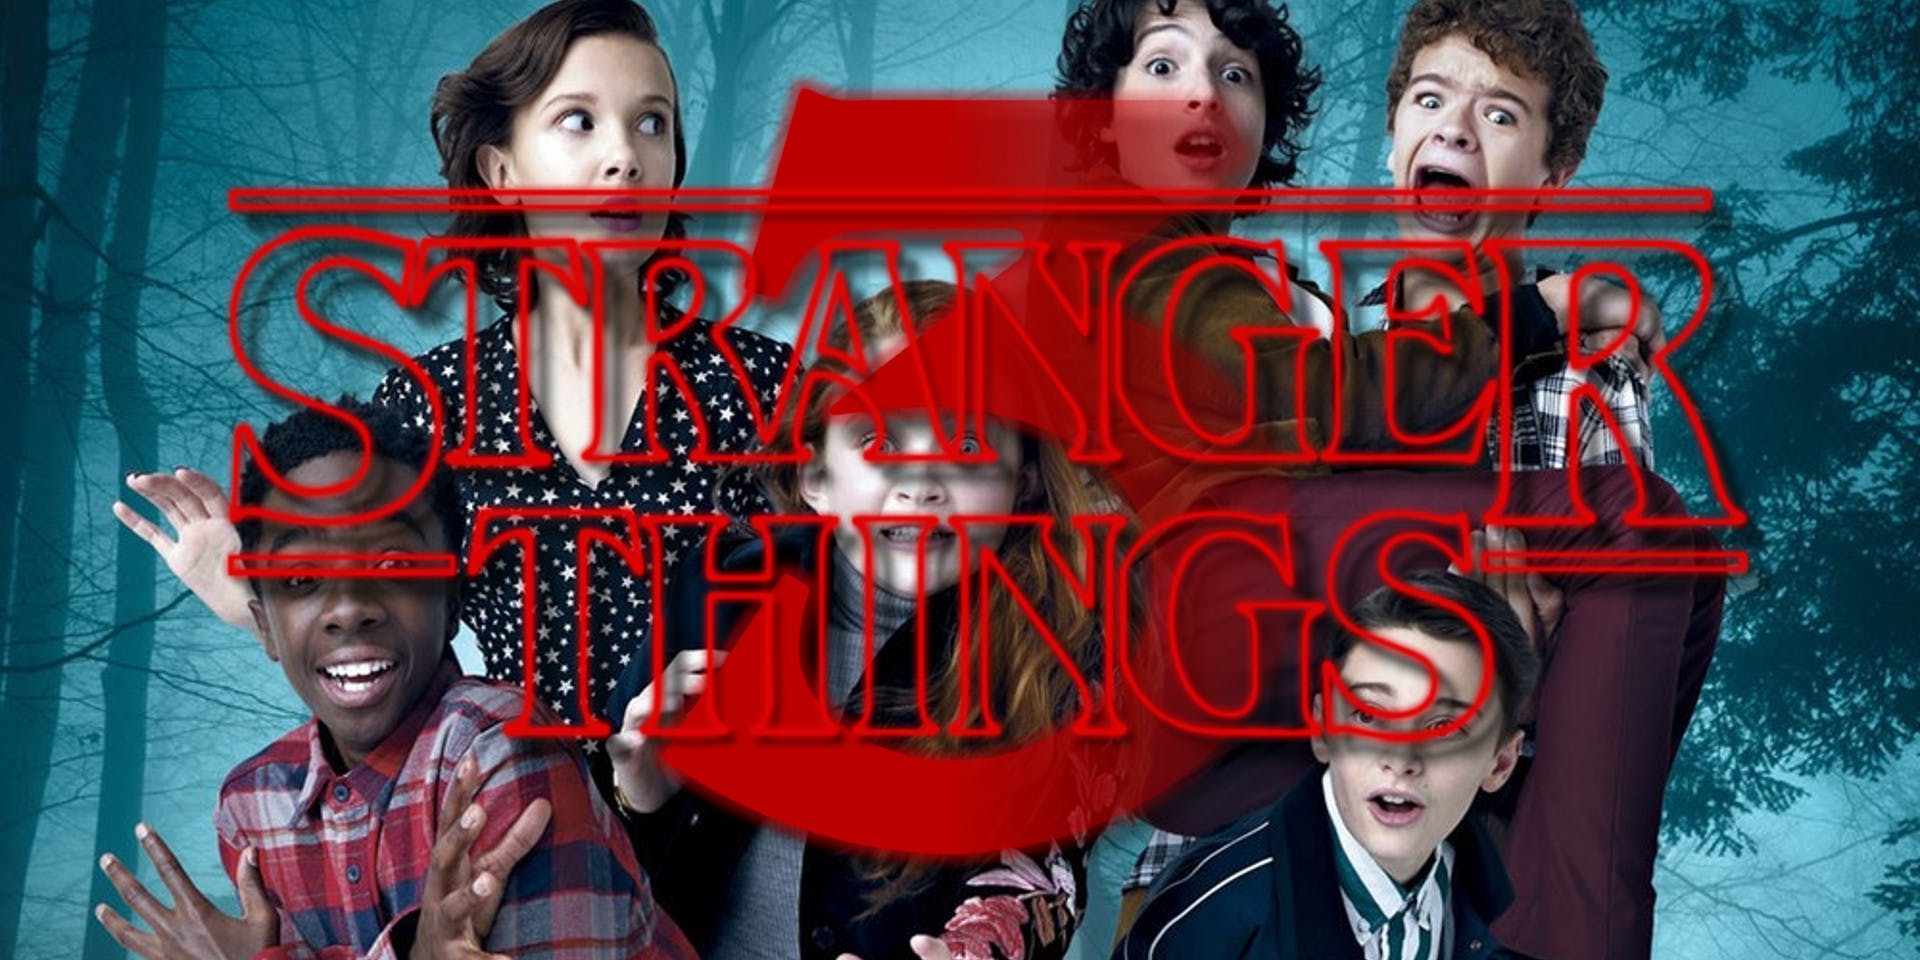 New 'Stranger Things' Season 3 Promo Art Reunites The Gang